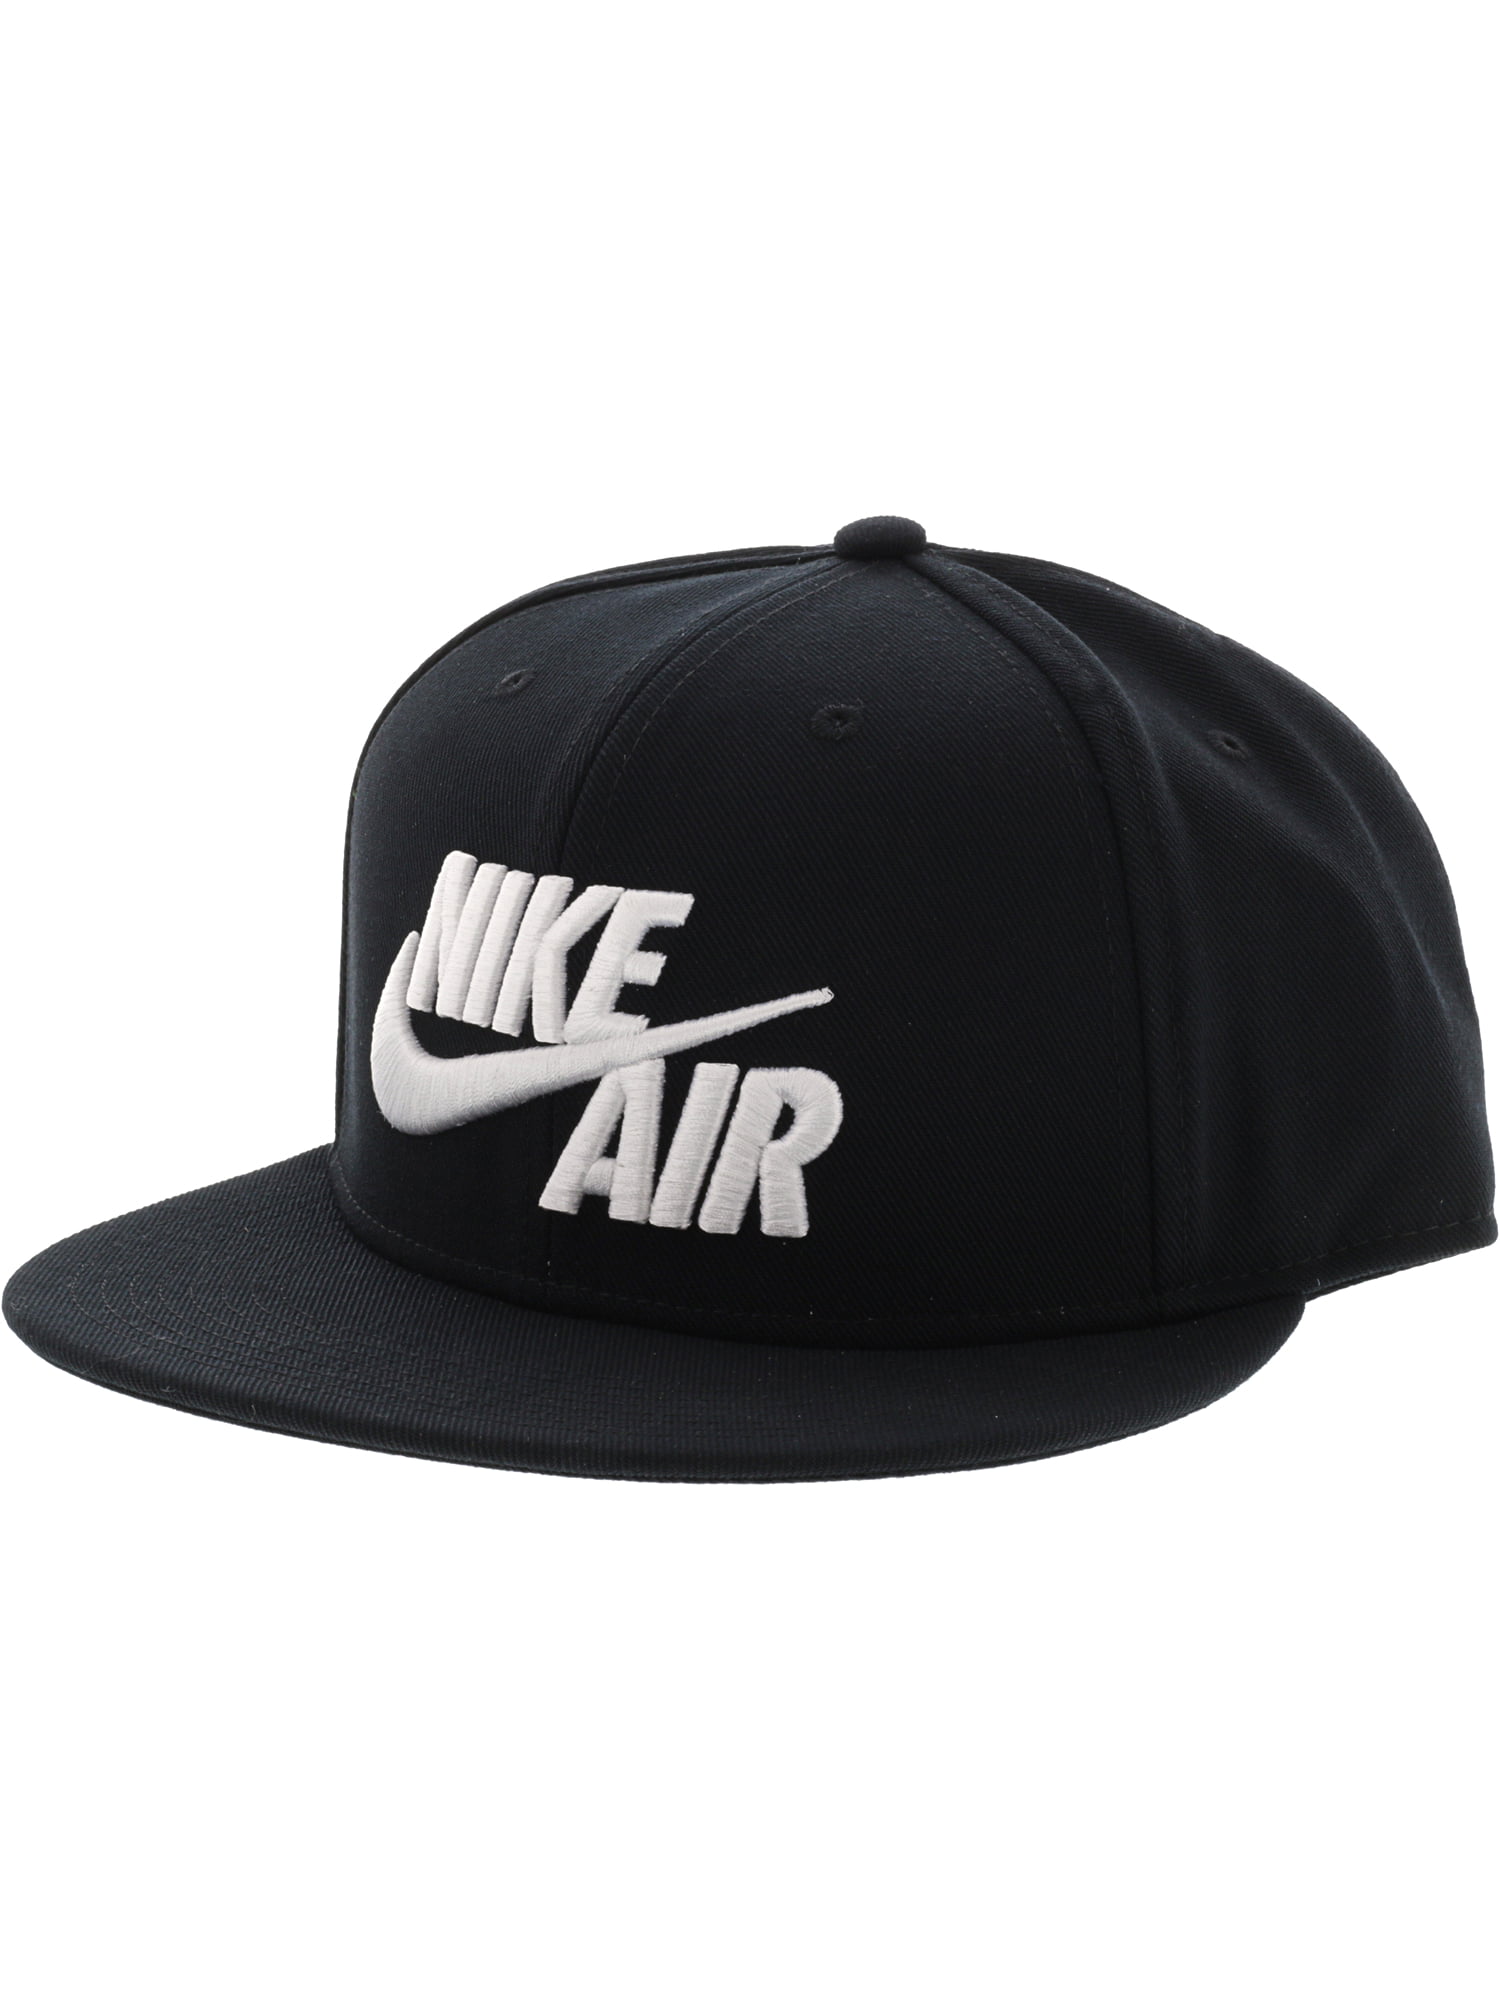 Nike Air True Snapback Hat - Walmart.com